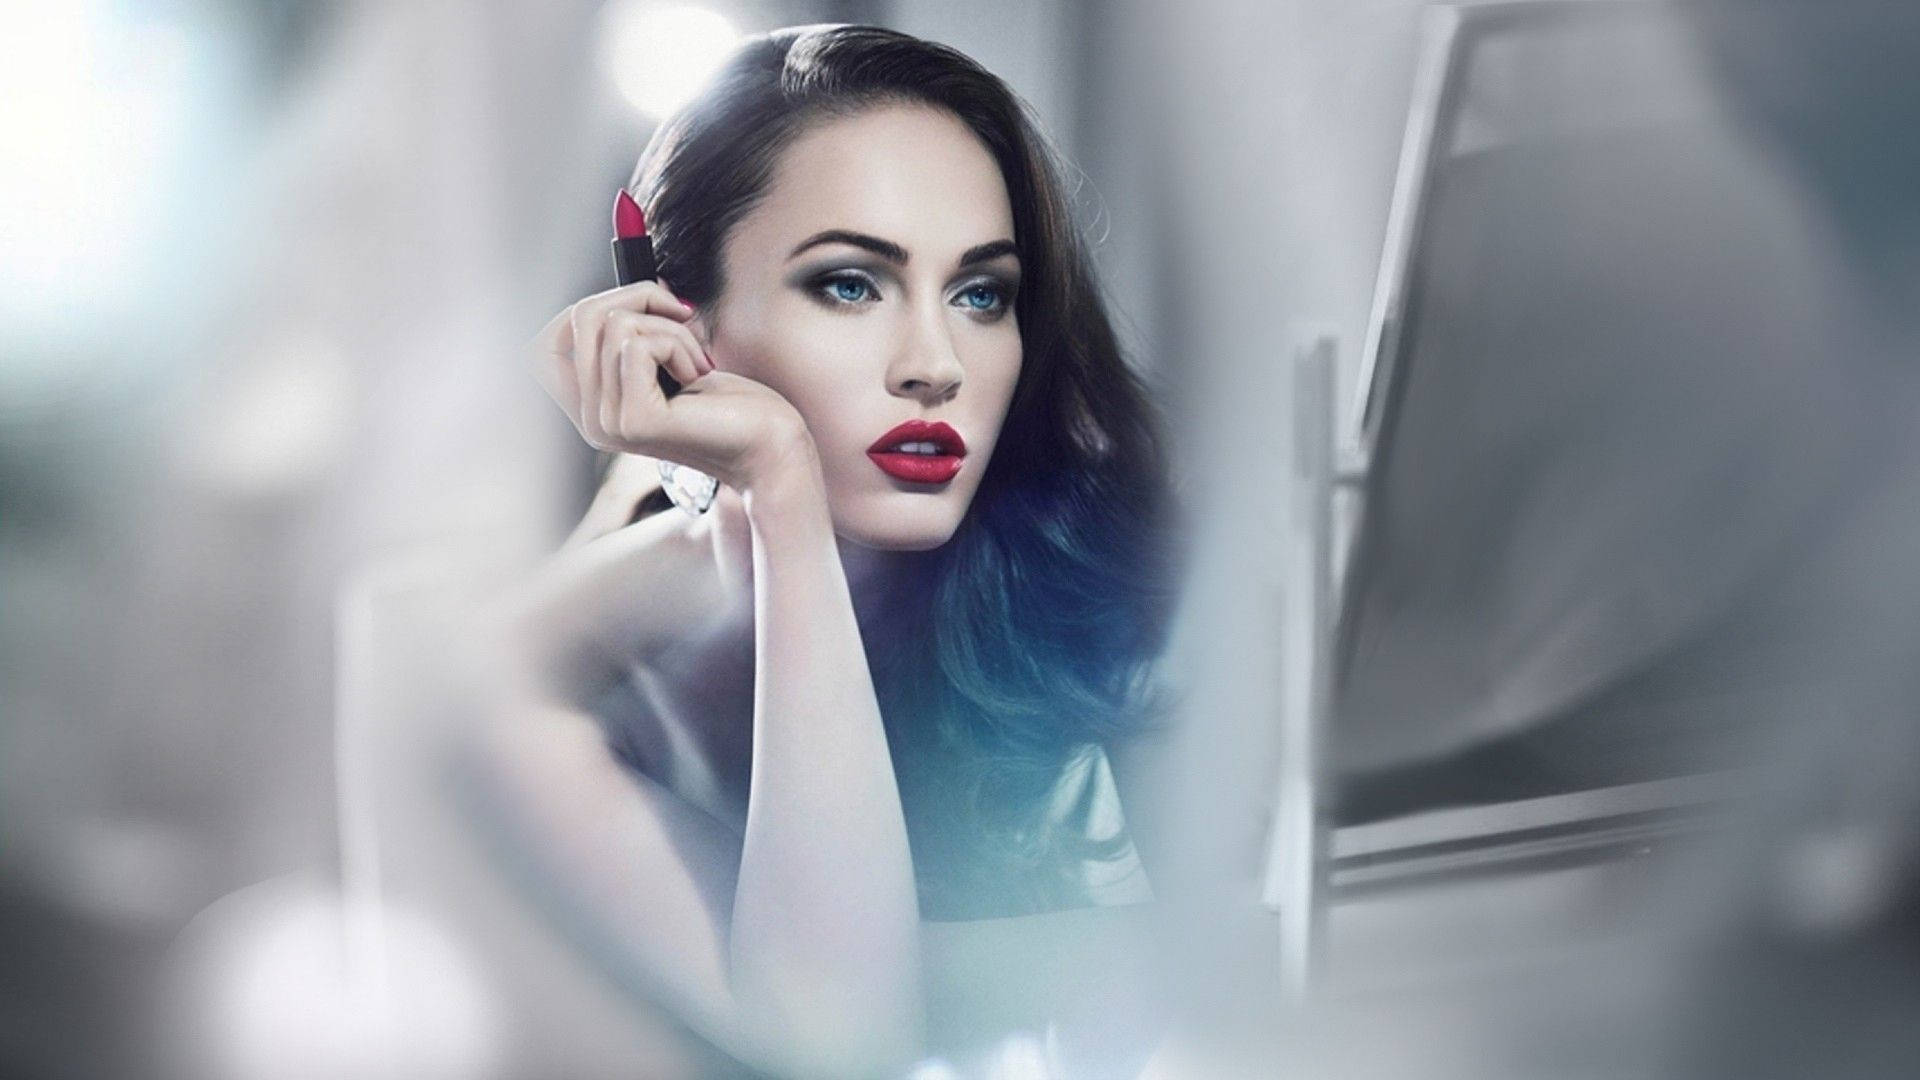 Beautiful Megan Fox Applying Red Lipstick In The Mirror Background